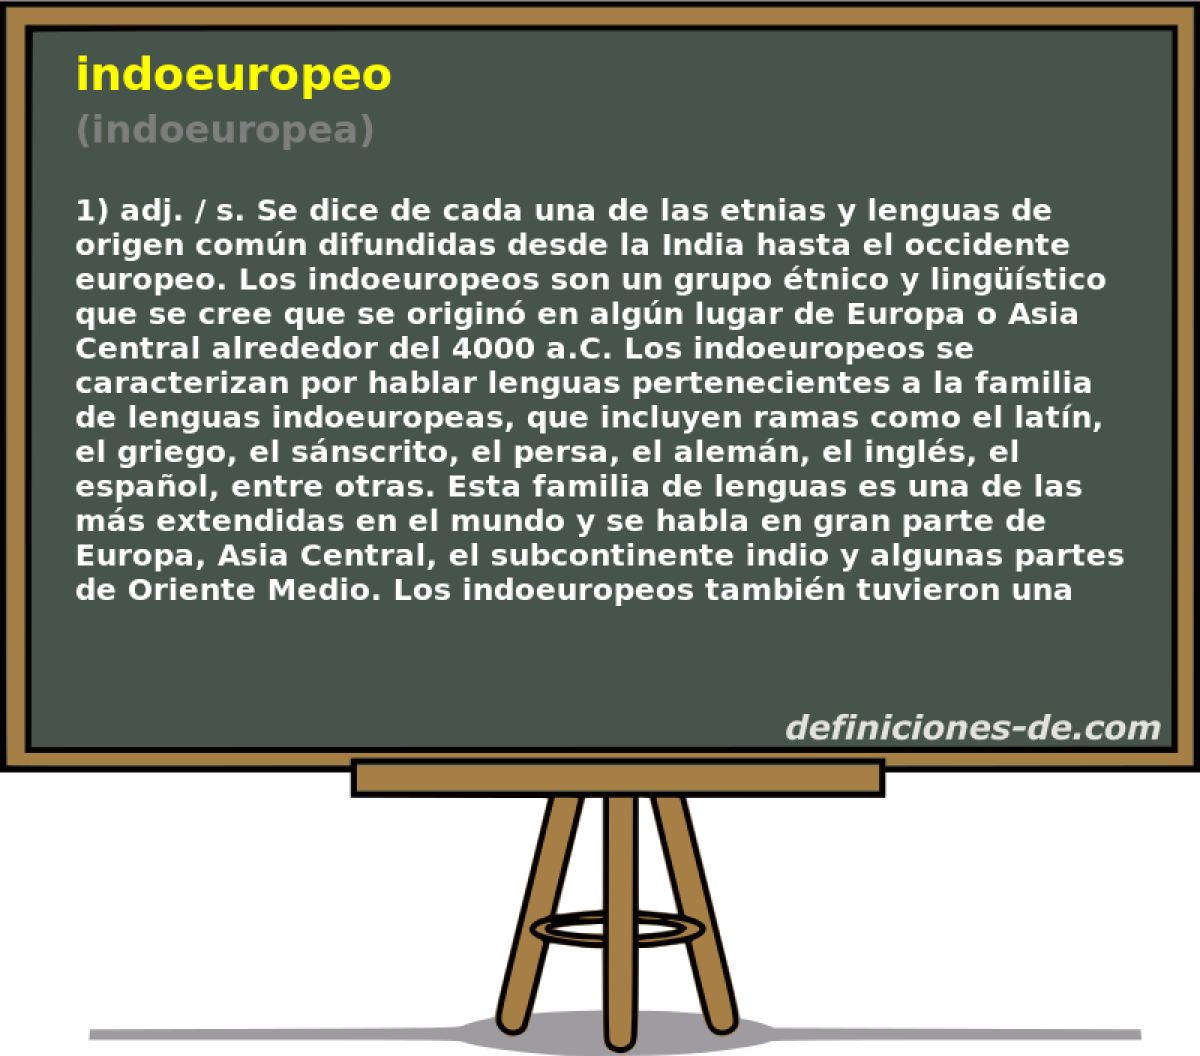 indoeuropeo (indoeuropea)